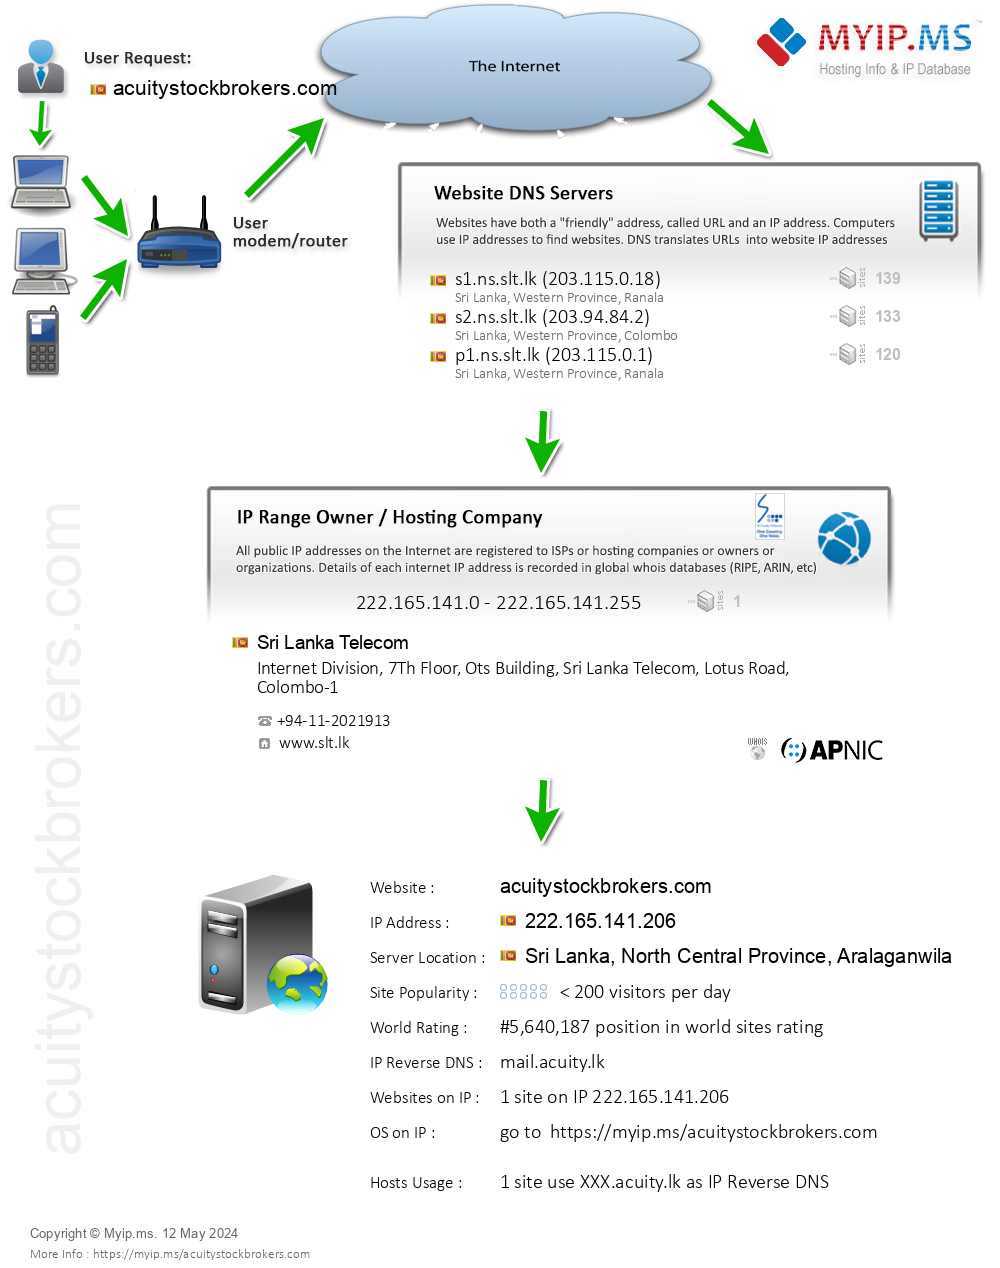 Acuitystockbrokers.com - Website Hosting Visual IP Diagram